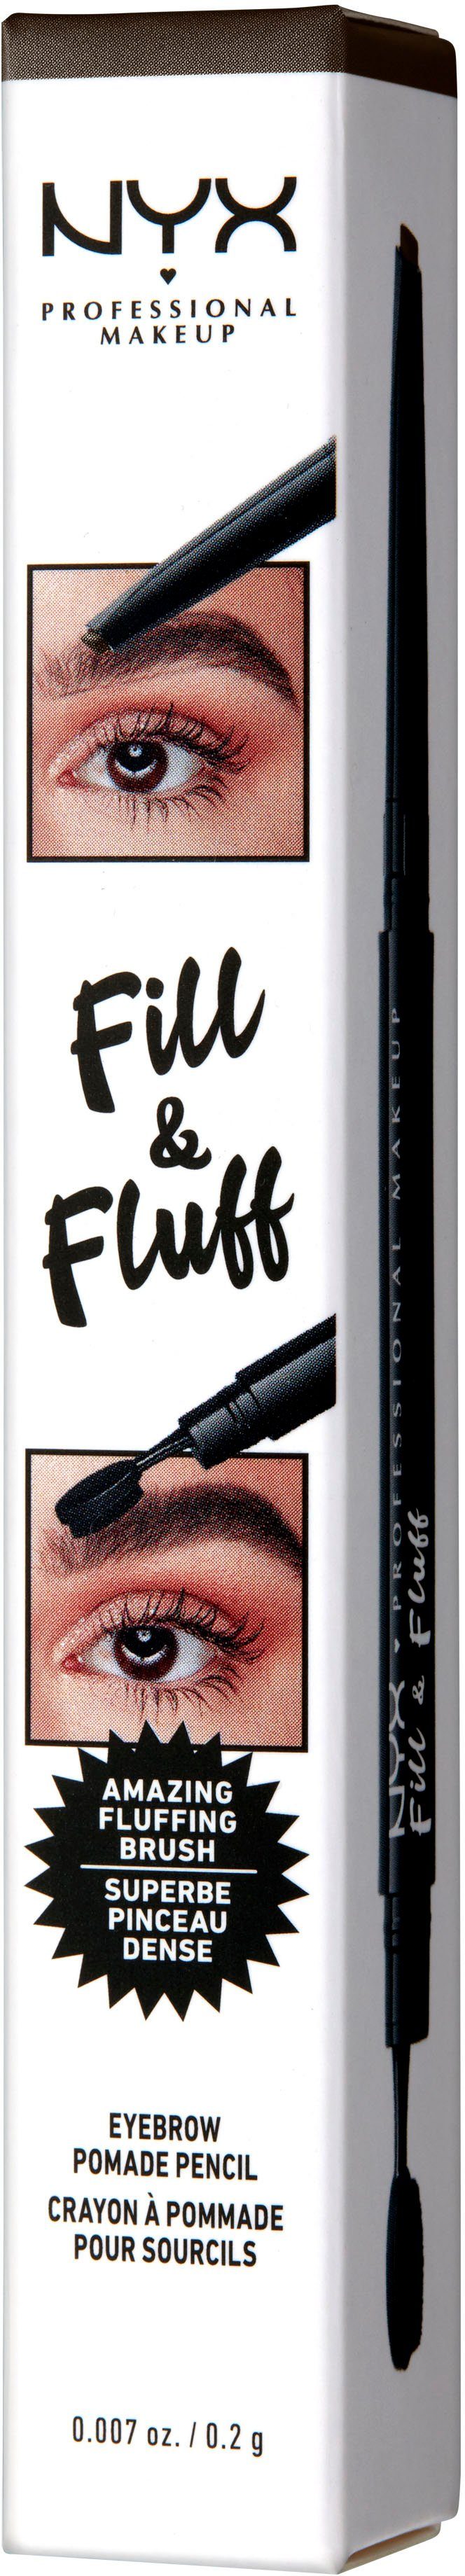 Eyebrow Augenbrauen-Stift & Fill Pencil Fluff Professional Pomade espresso NYX Makeup